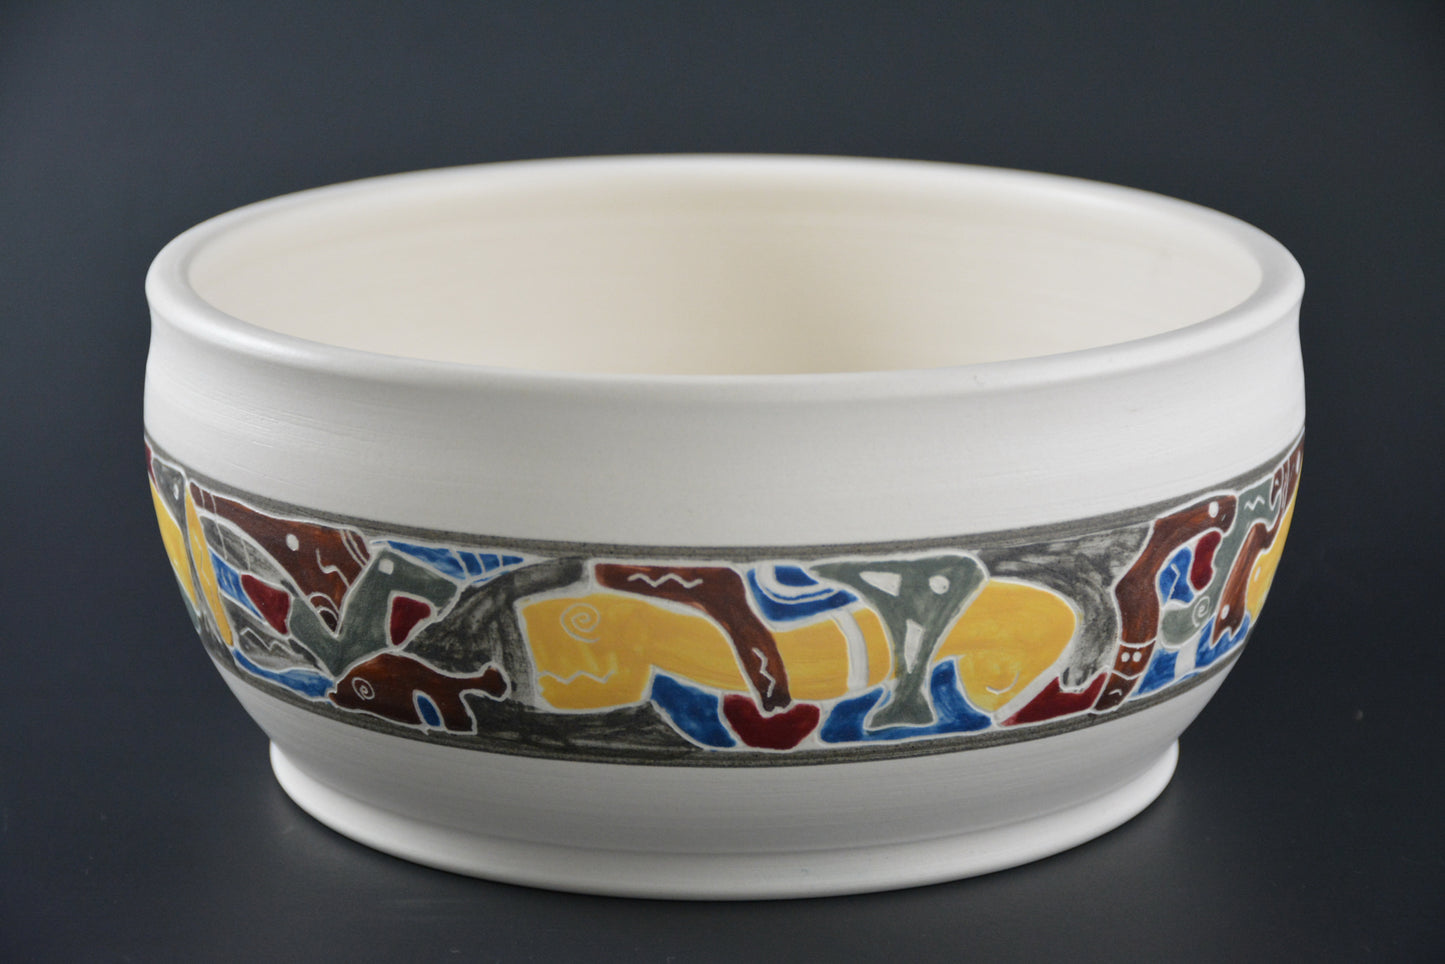 BL-29 Decorative Ceramic Candy Box - Porcelain Candy Box